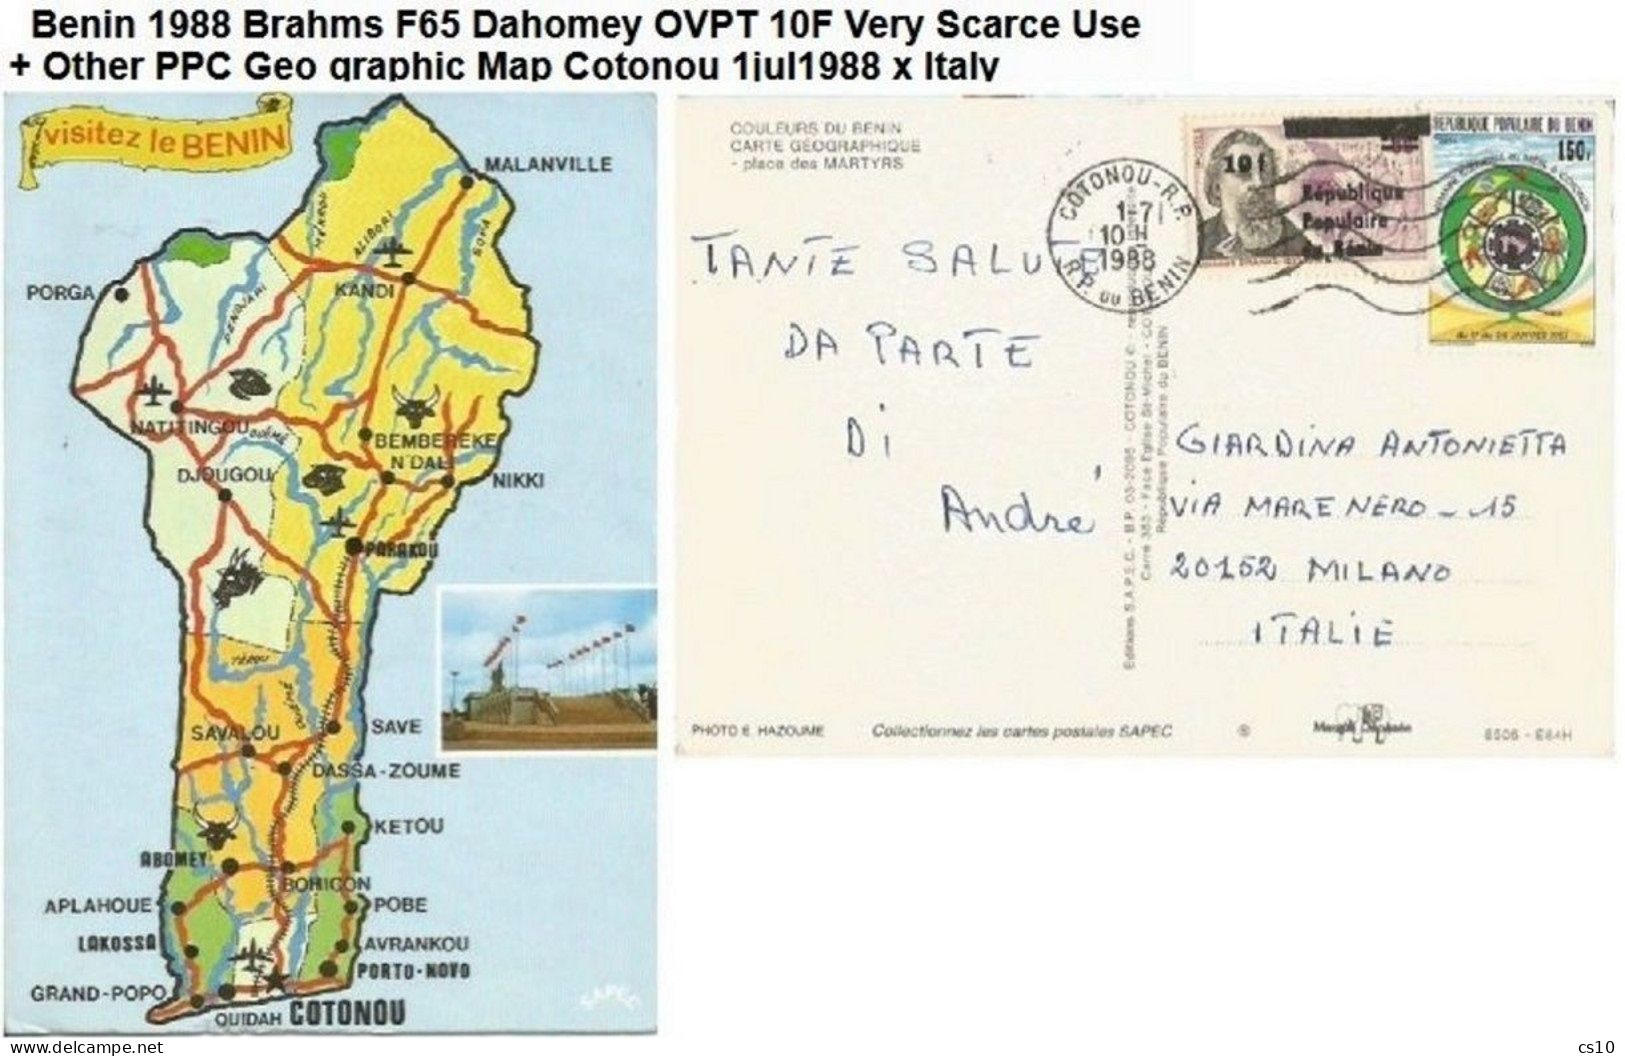 Benin 1988 Brahms F65 Dahomey OVPT 10F Very Scarce Use + Other PPC Geo Graphic Map Cotonou 1jul1988 X Italy - Benin